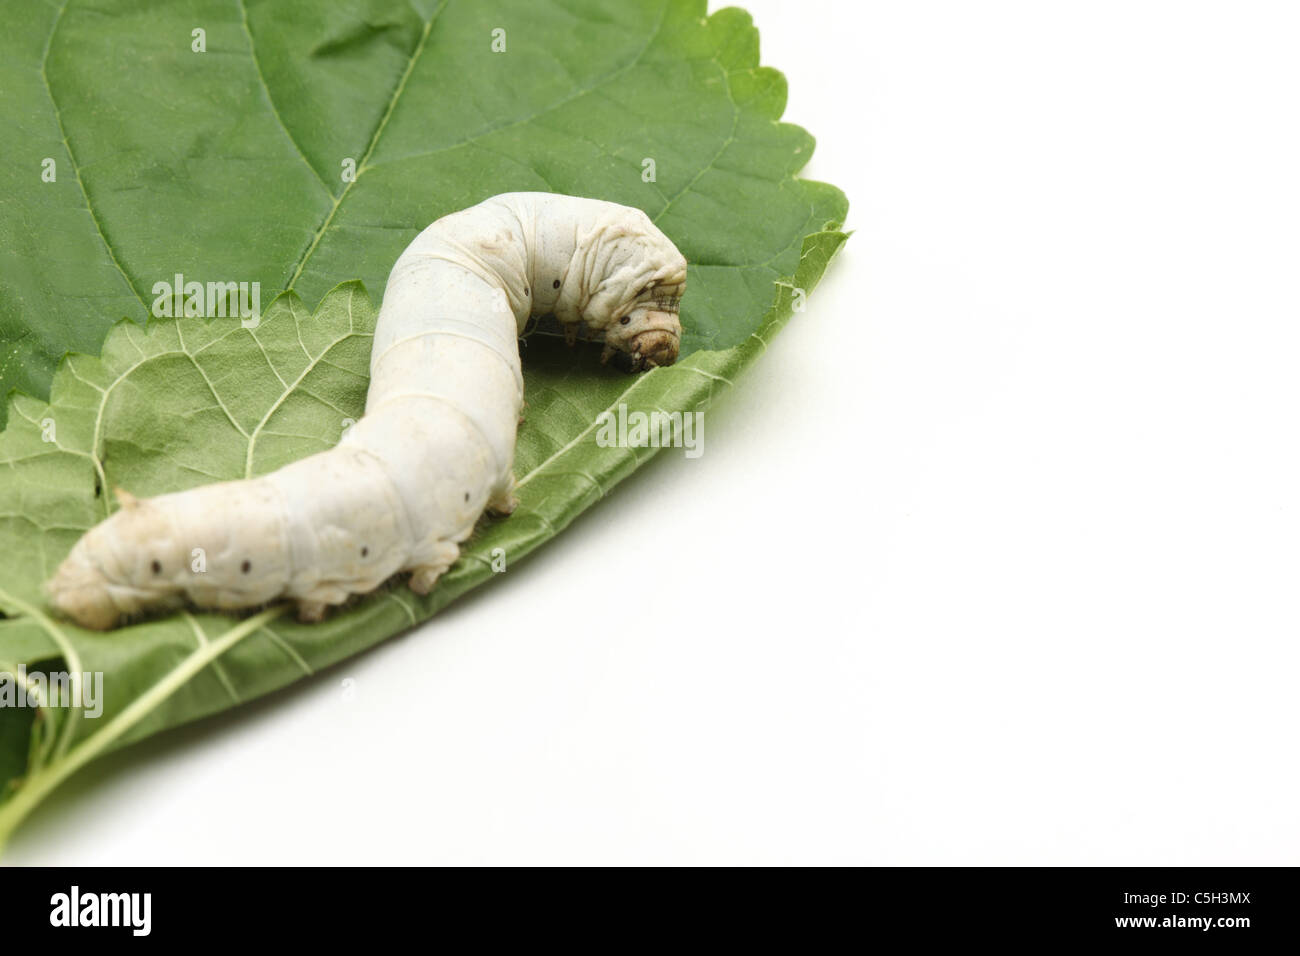 Worm di seta mangiare mulberry foglia verde Foto Stock